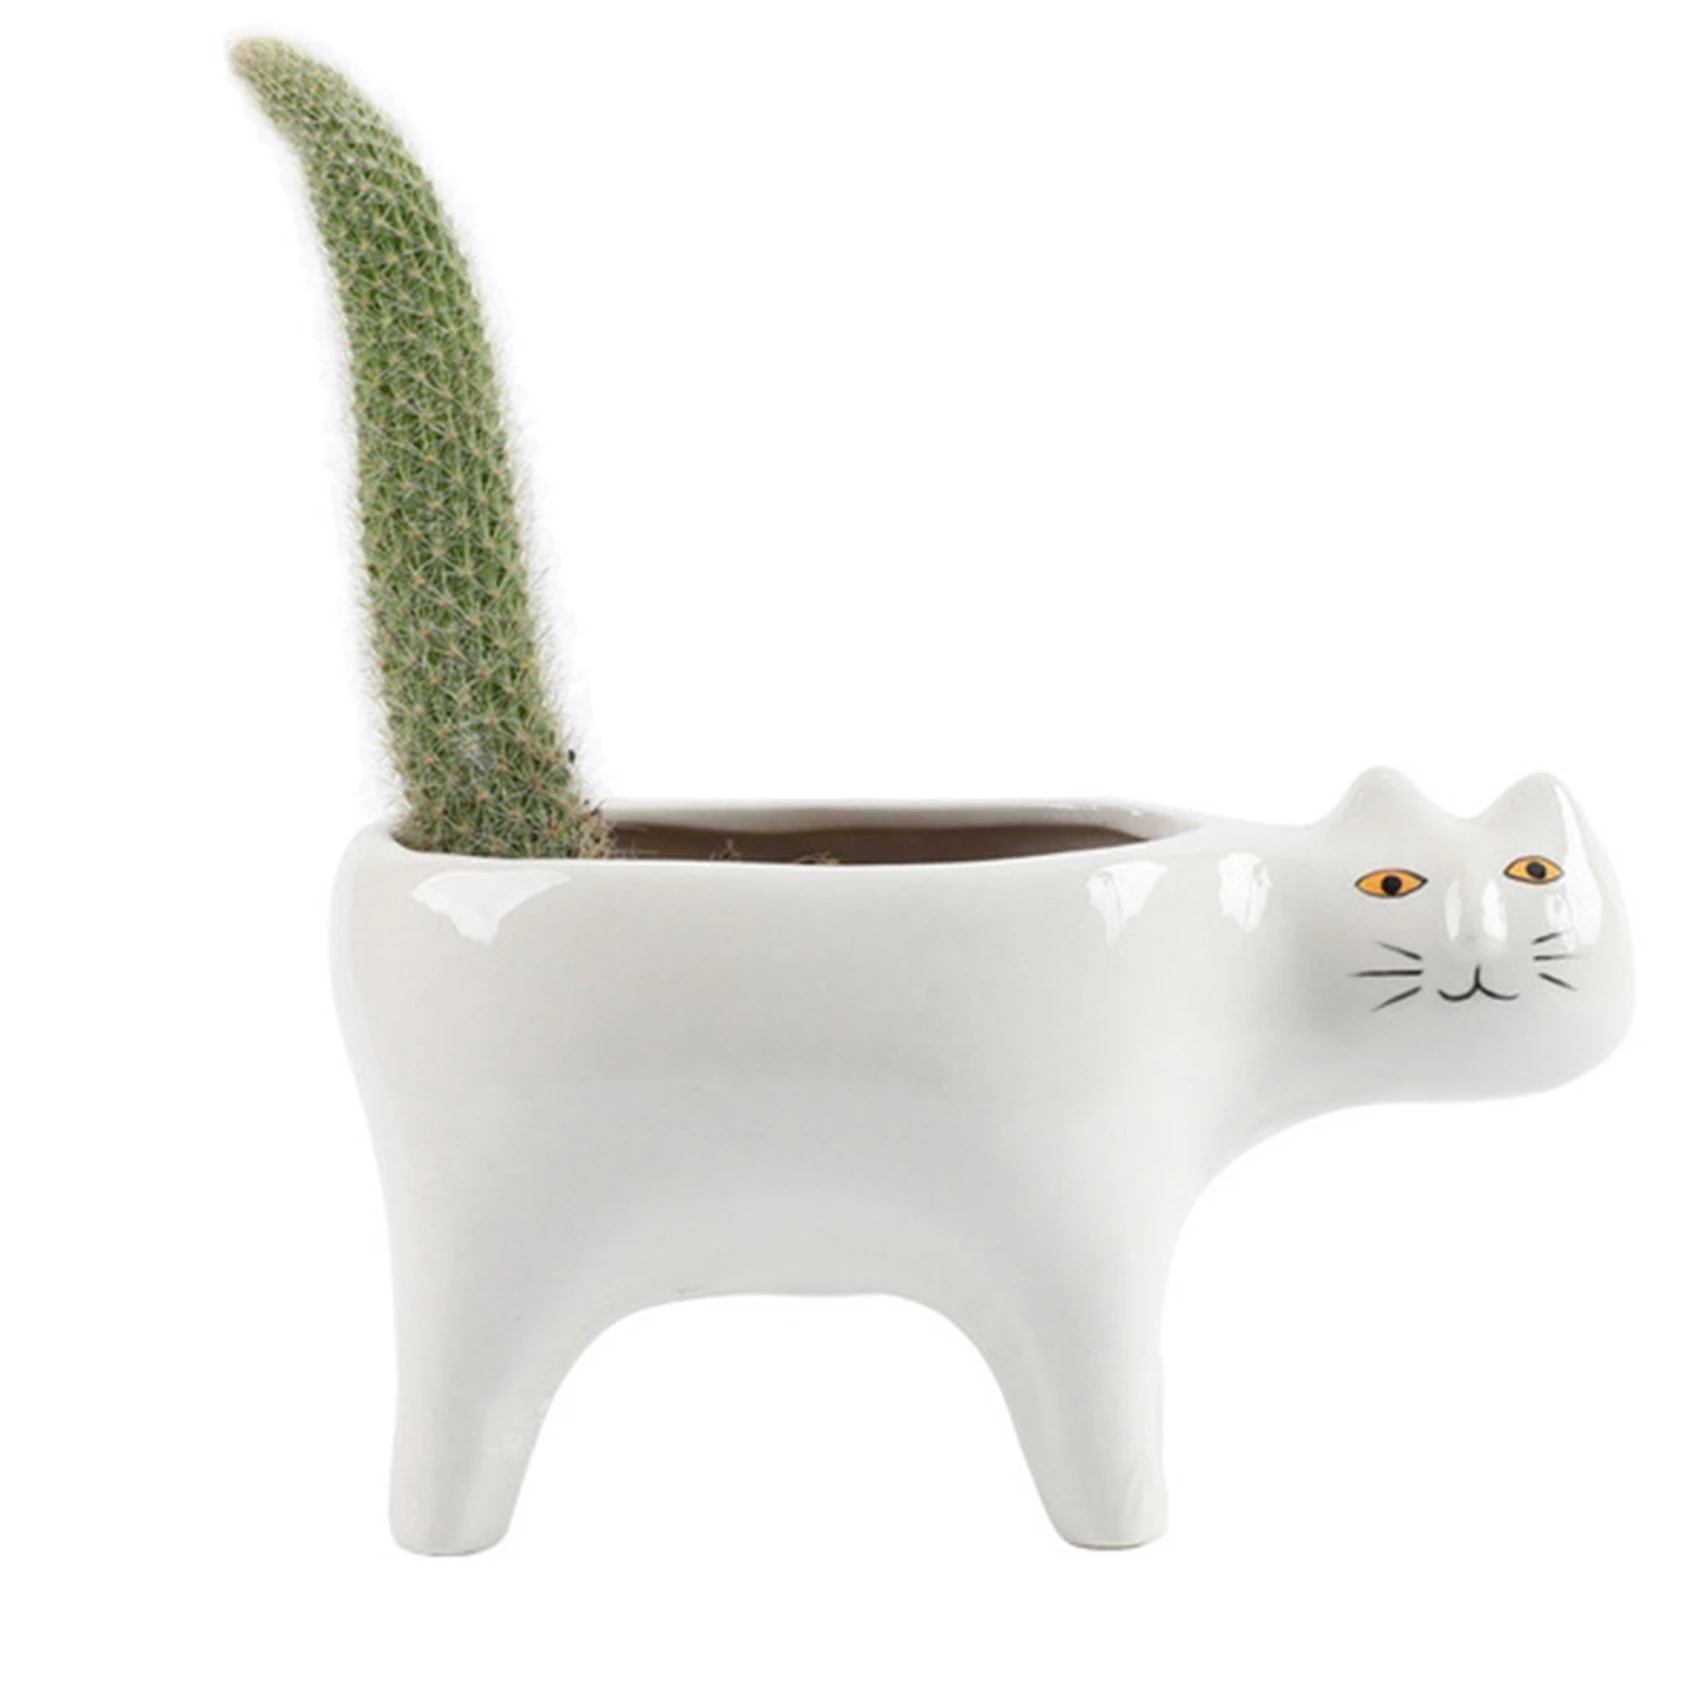 

Cute Cat Ceramic Garden Flower Pot Animal Image Cactus Plant Planter Succulent Plant Container Tabletop Decoration White